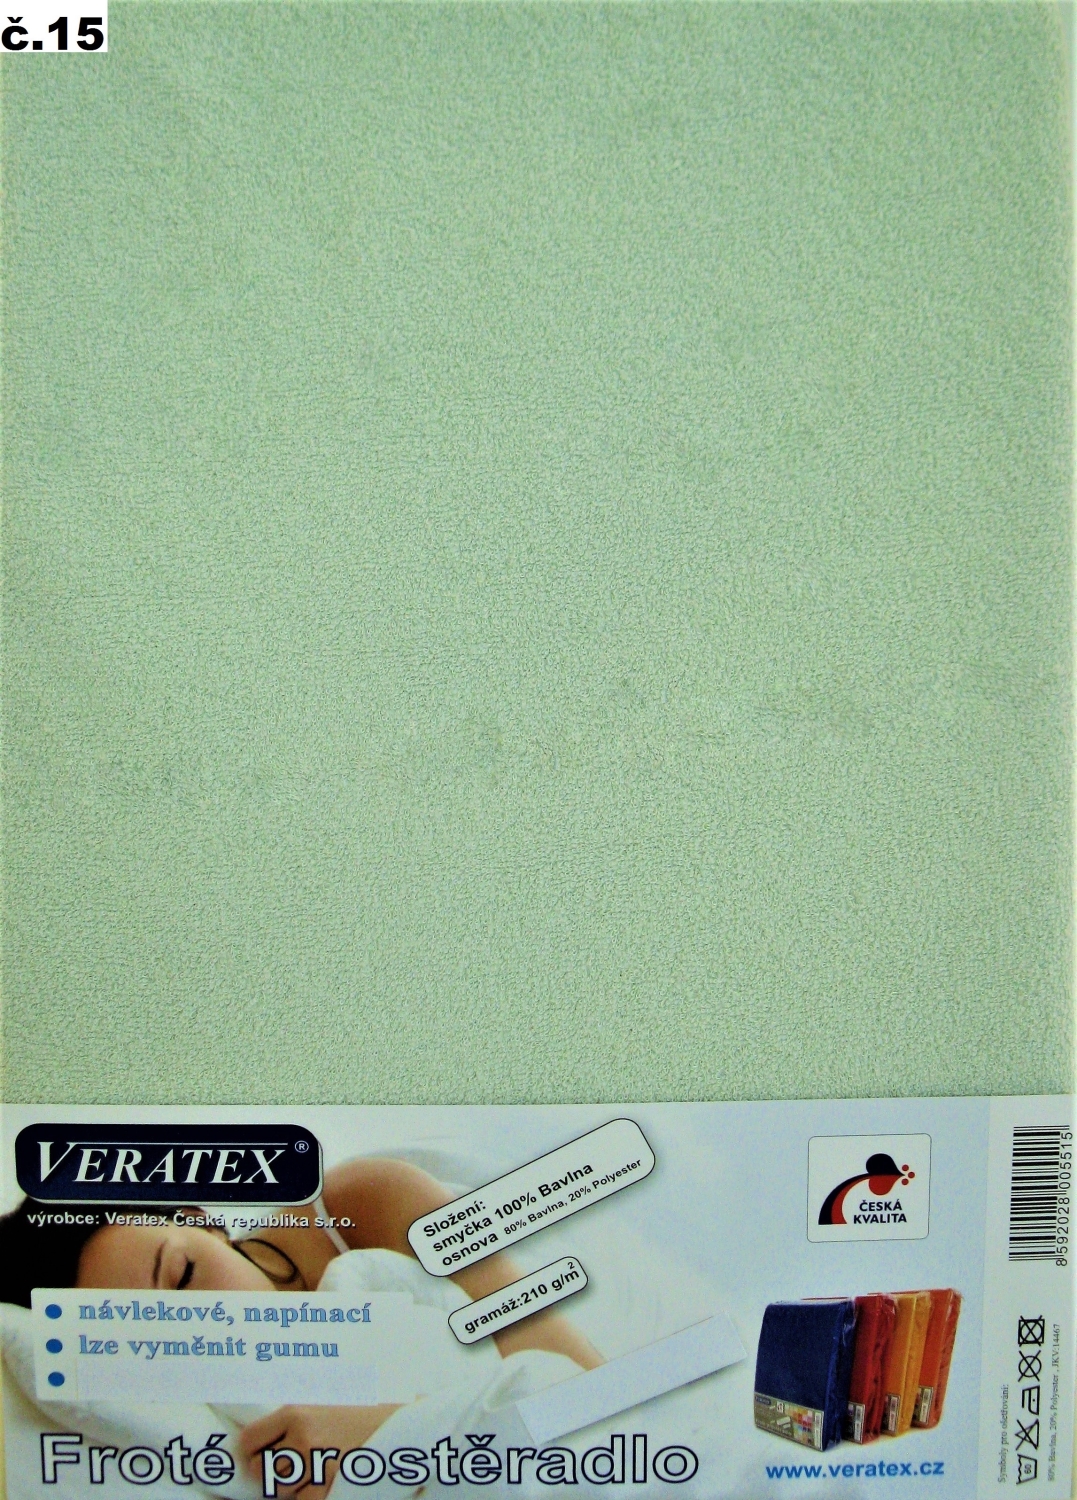 Veratex Froté prostěradlo 160x220/16 cm (č.15 sv.zelená) 160 x 220 cm